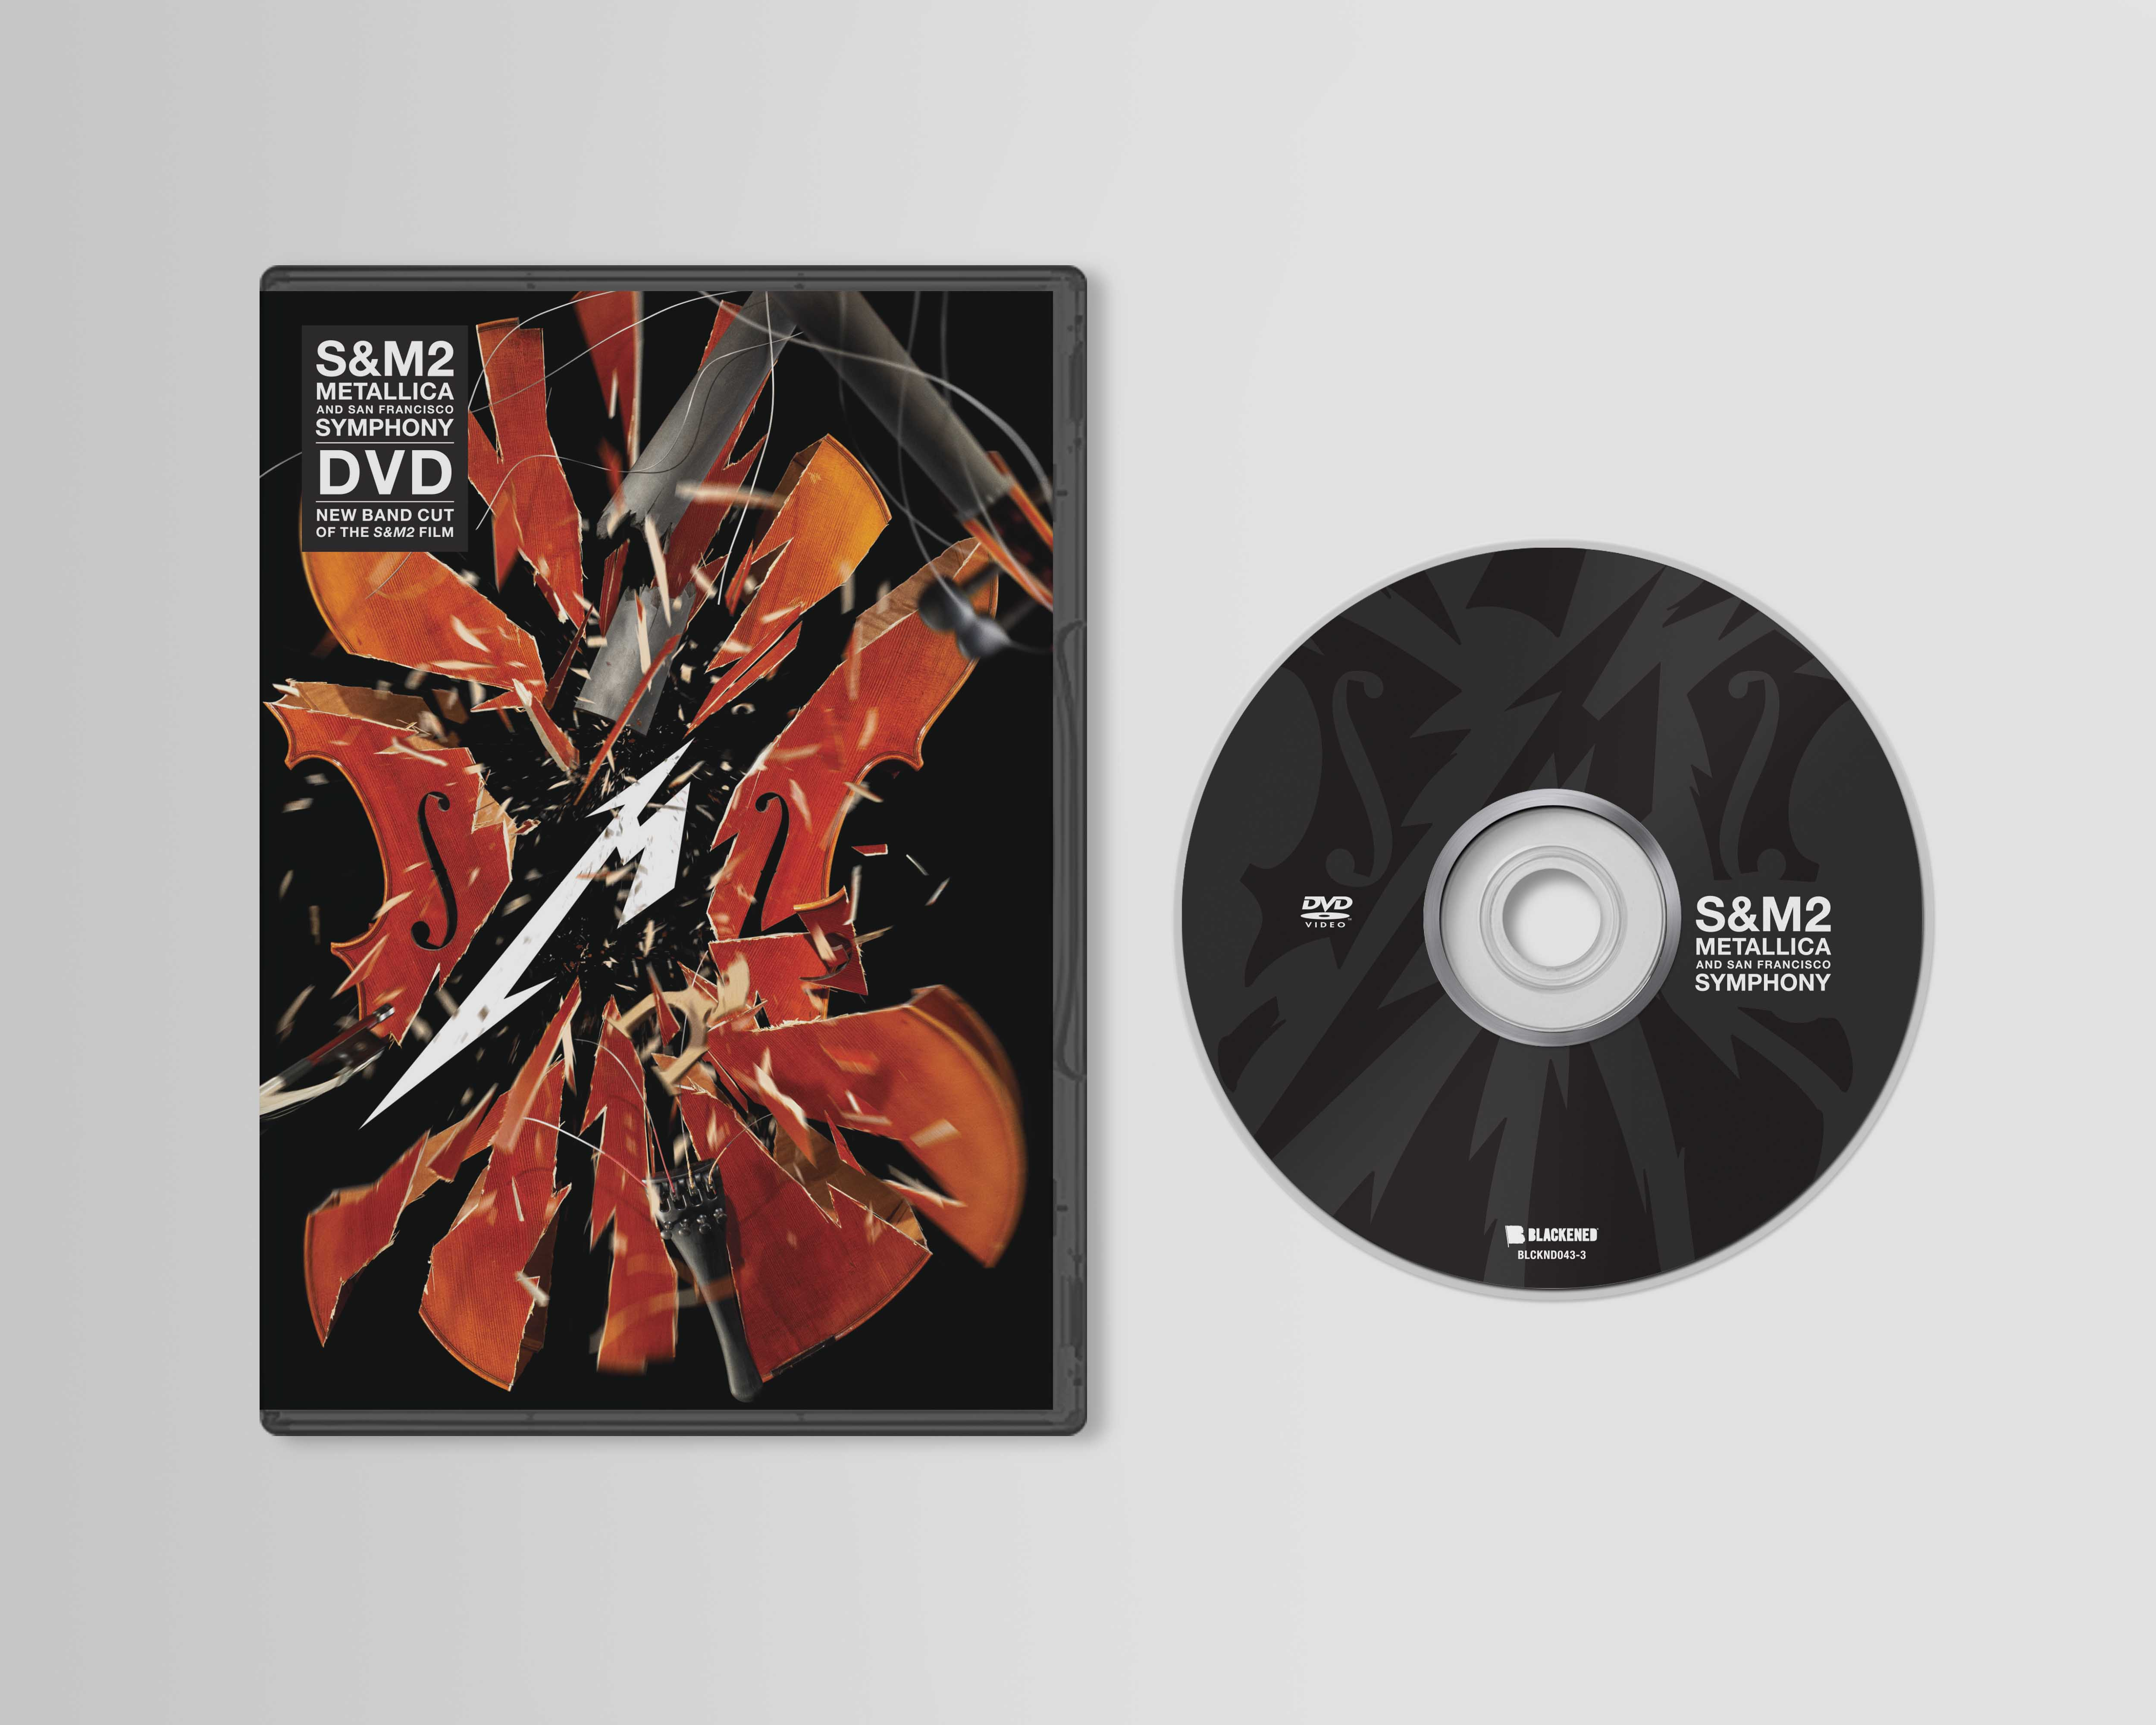 S&M2 (DVD) - - Metallica